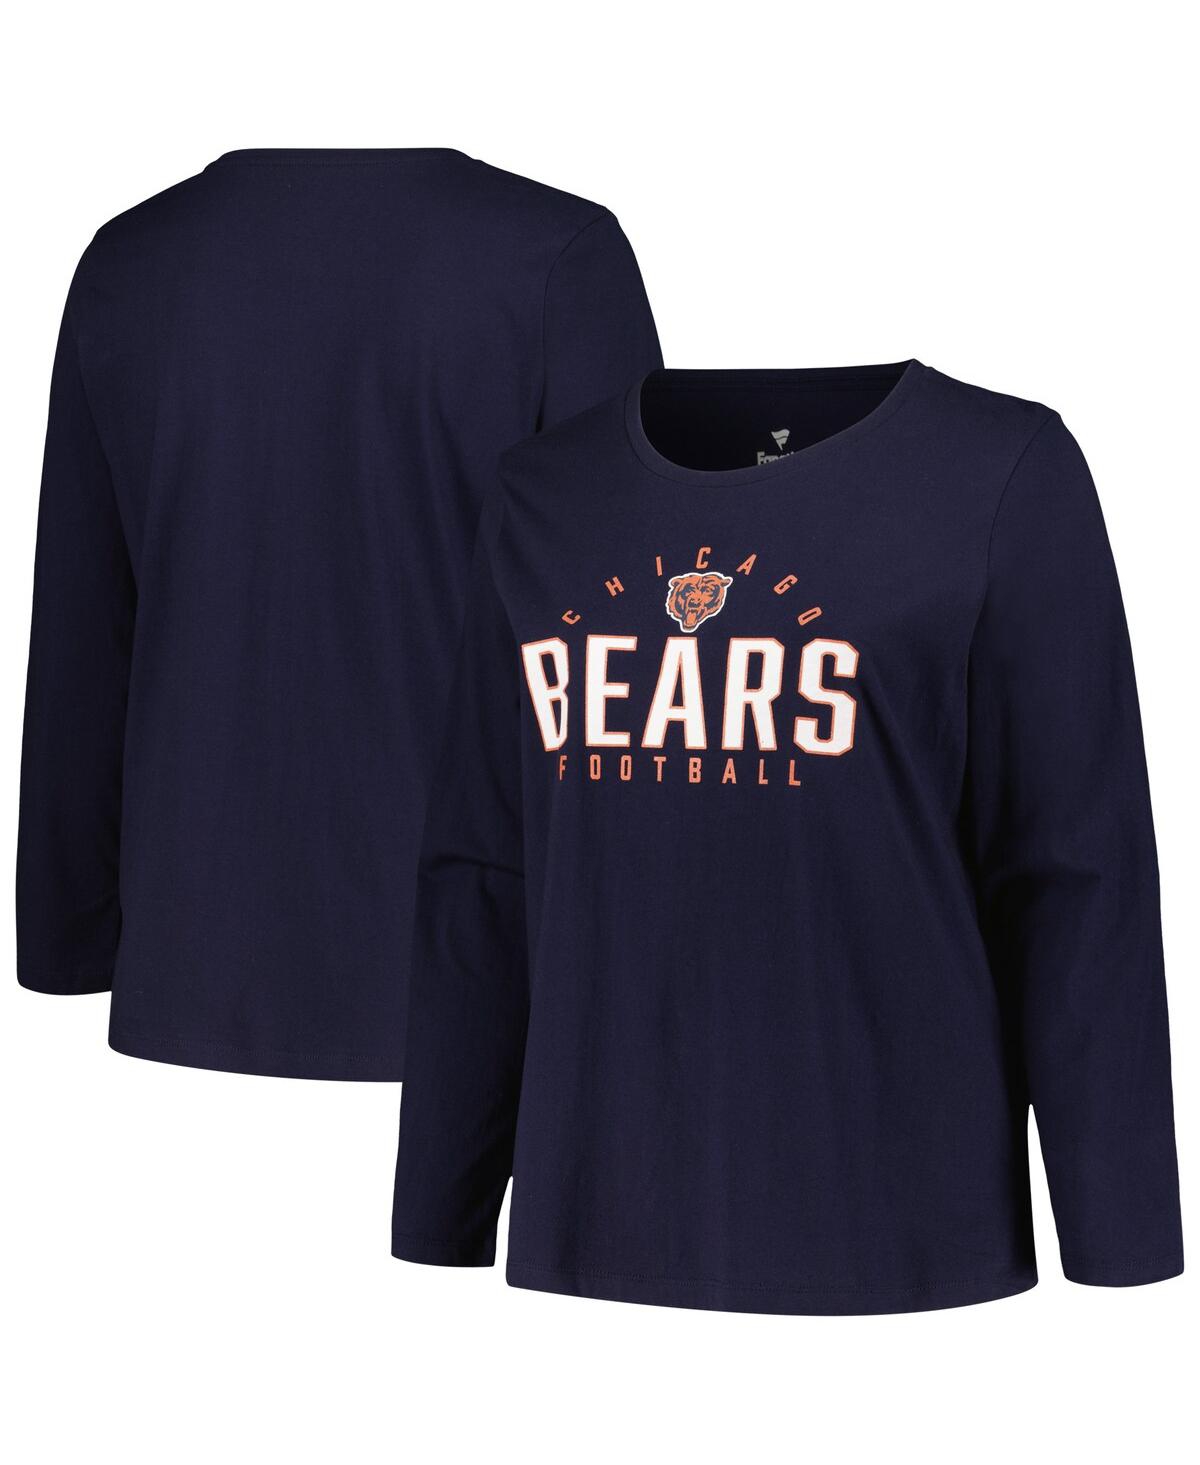 Fanatics Women's  Navy Chicago Bears Plus Size Foiled Play Long Sleeve T-shirt